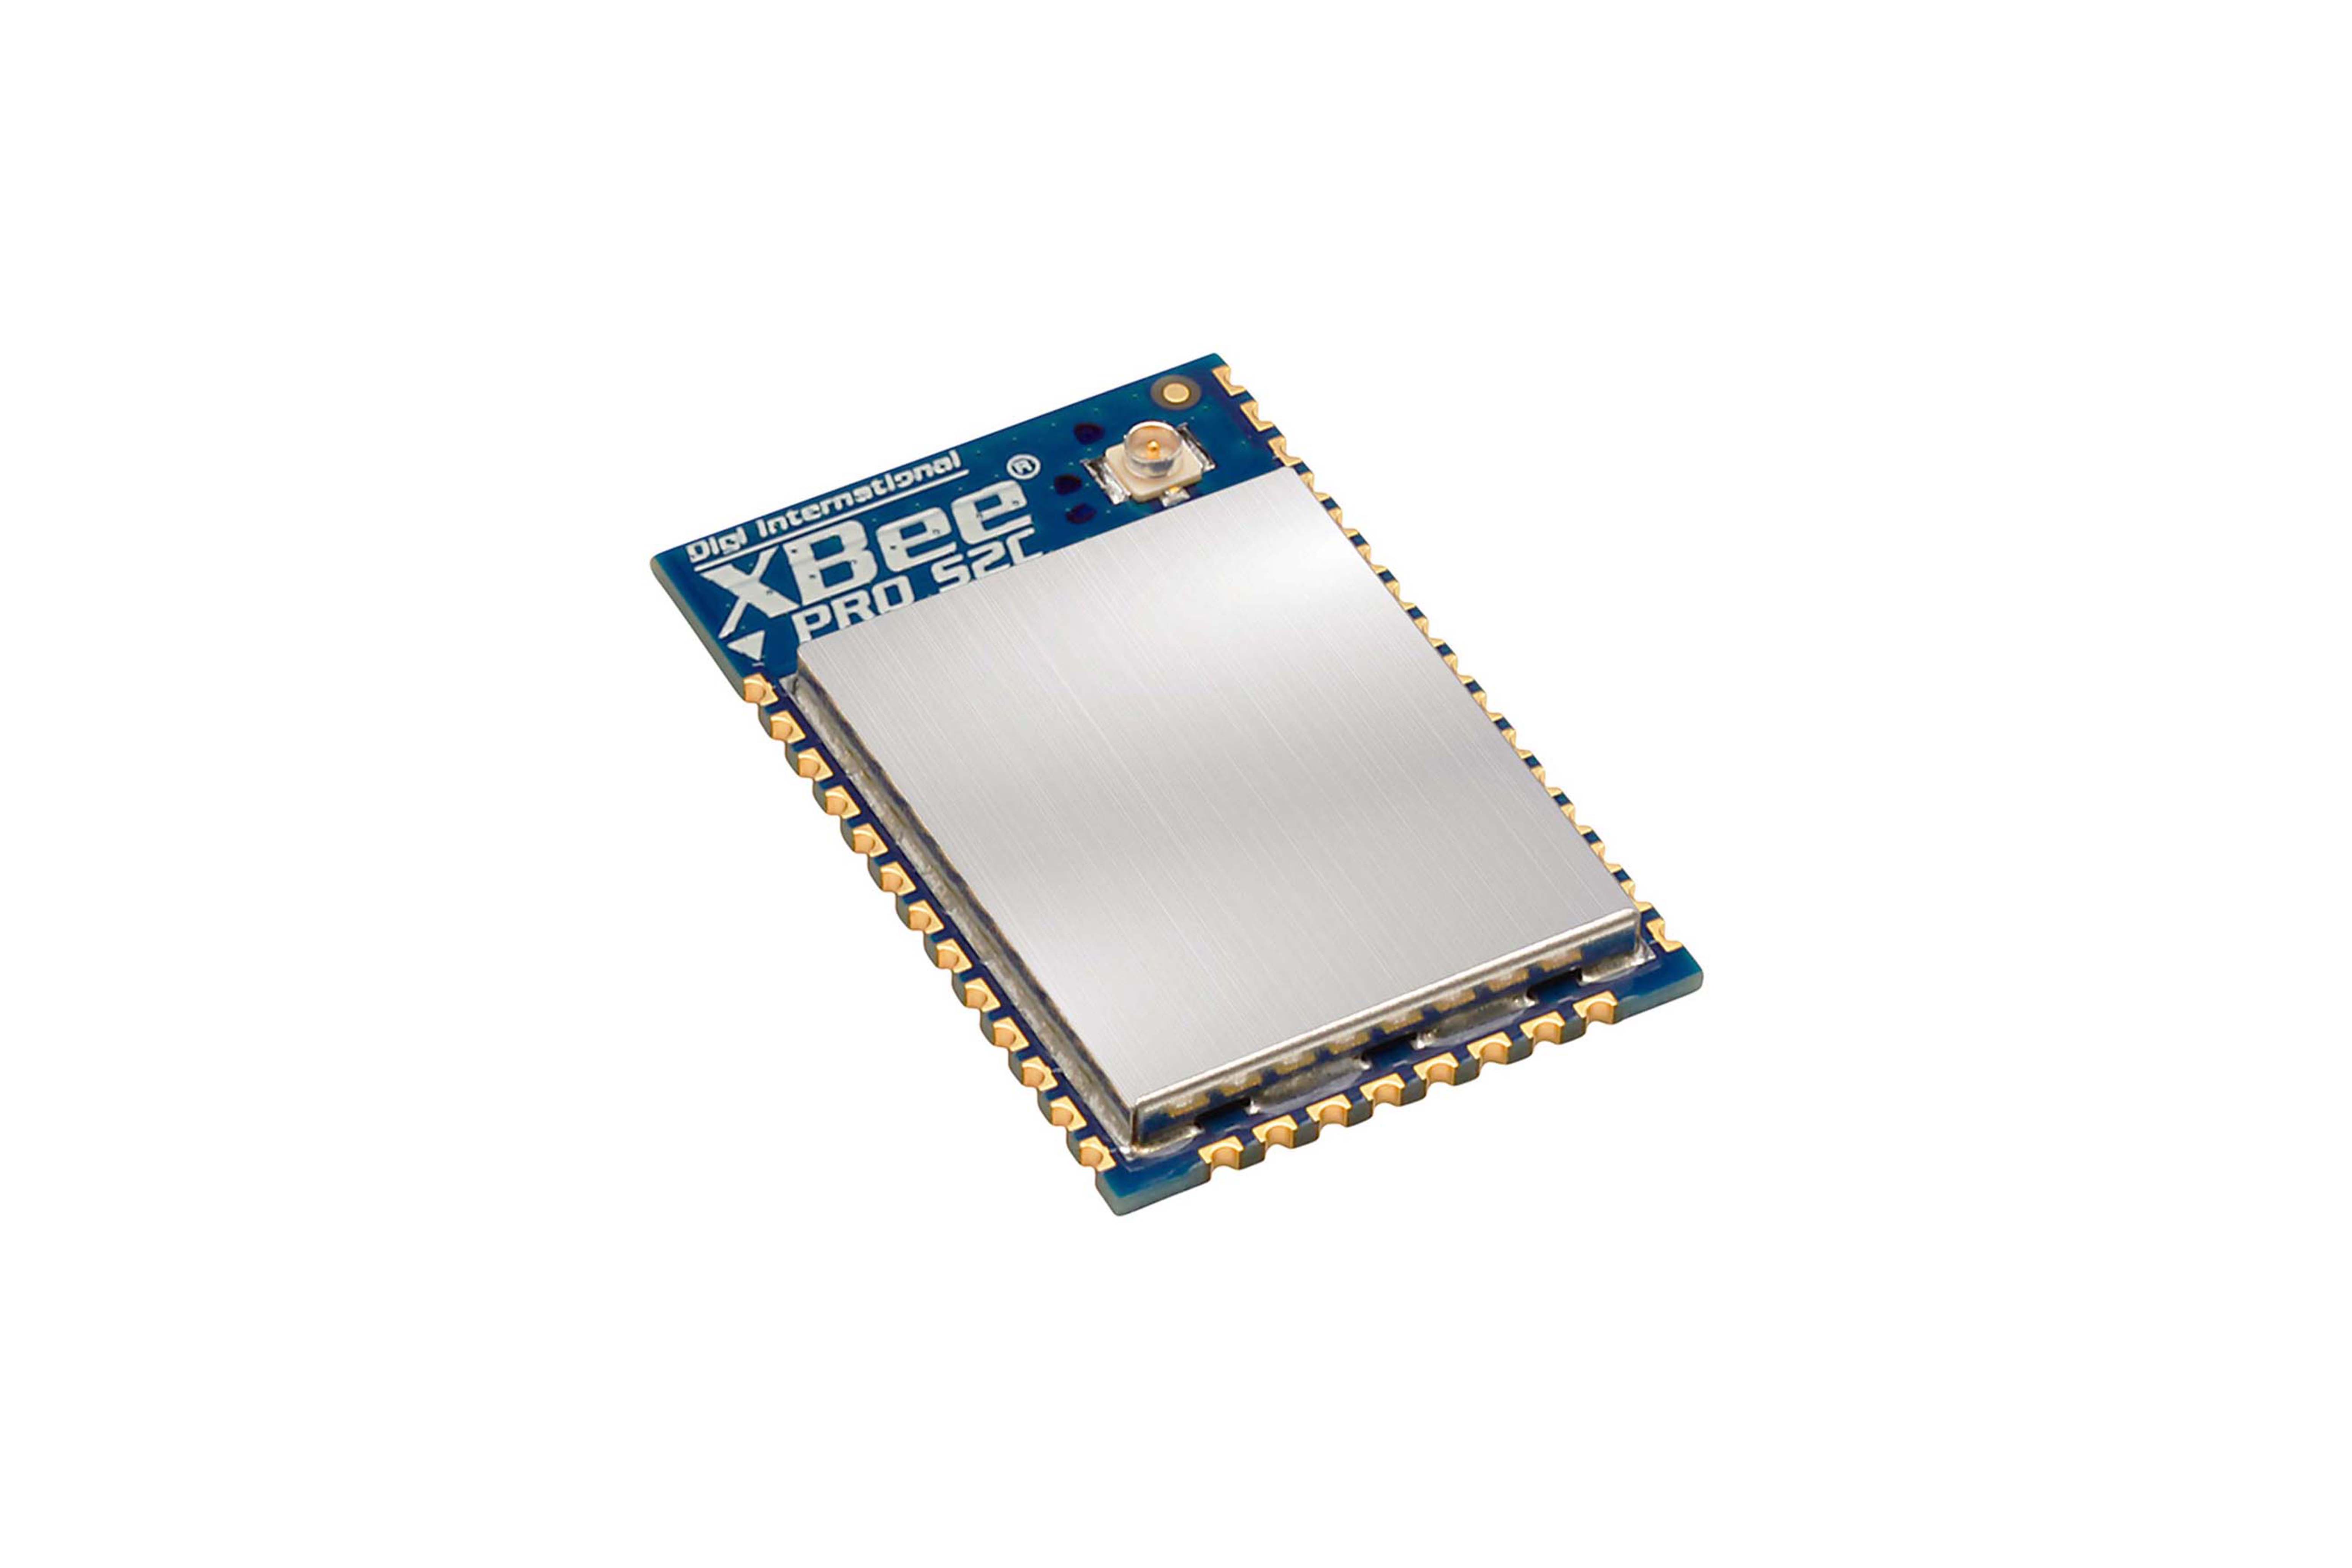 Xbee-PRO S2C 802.15.4, 2,4 GHz, SMT